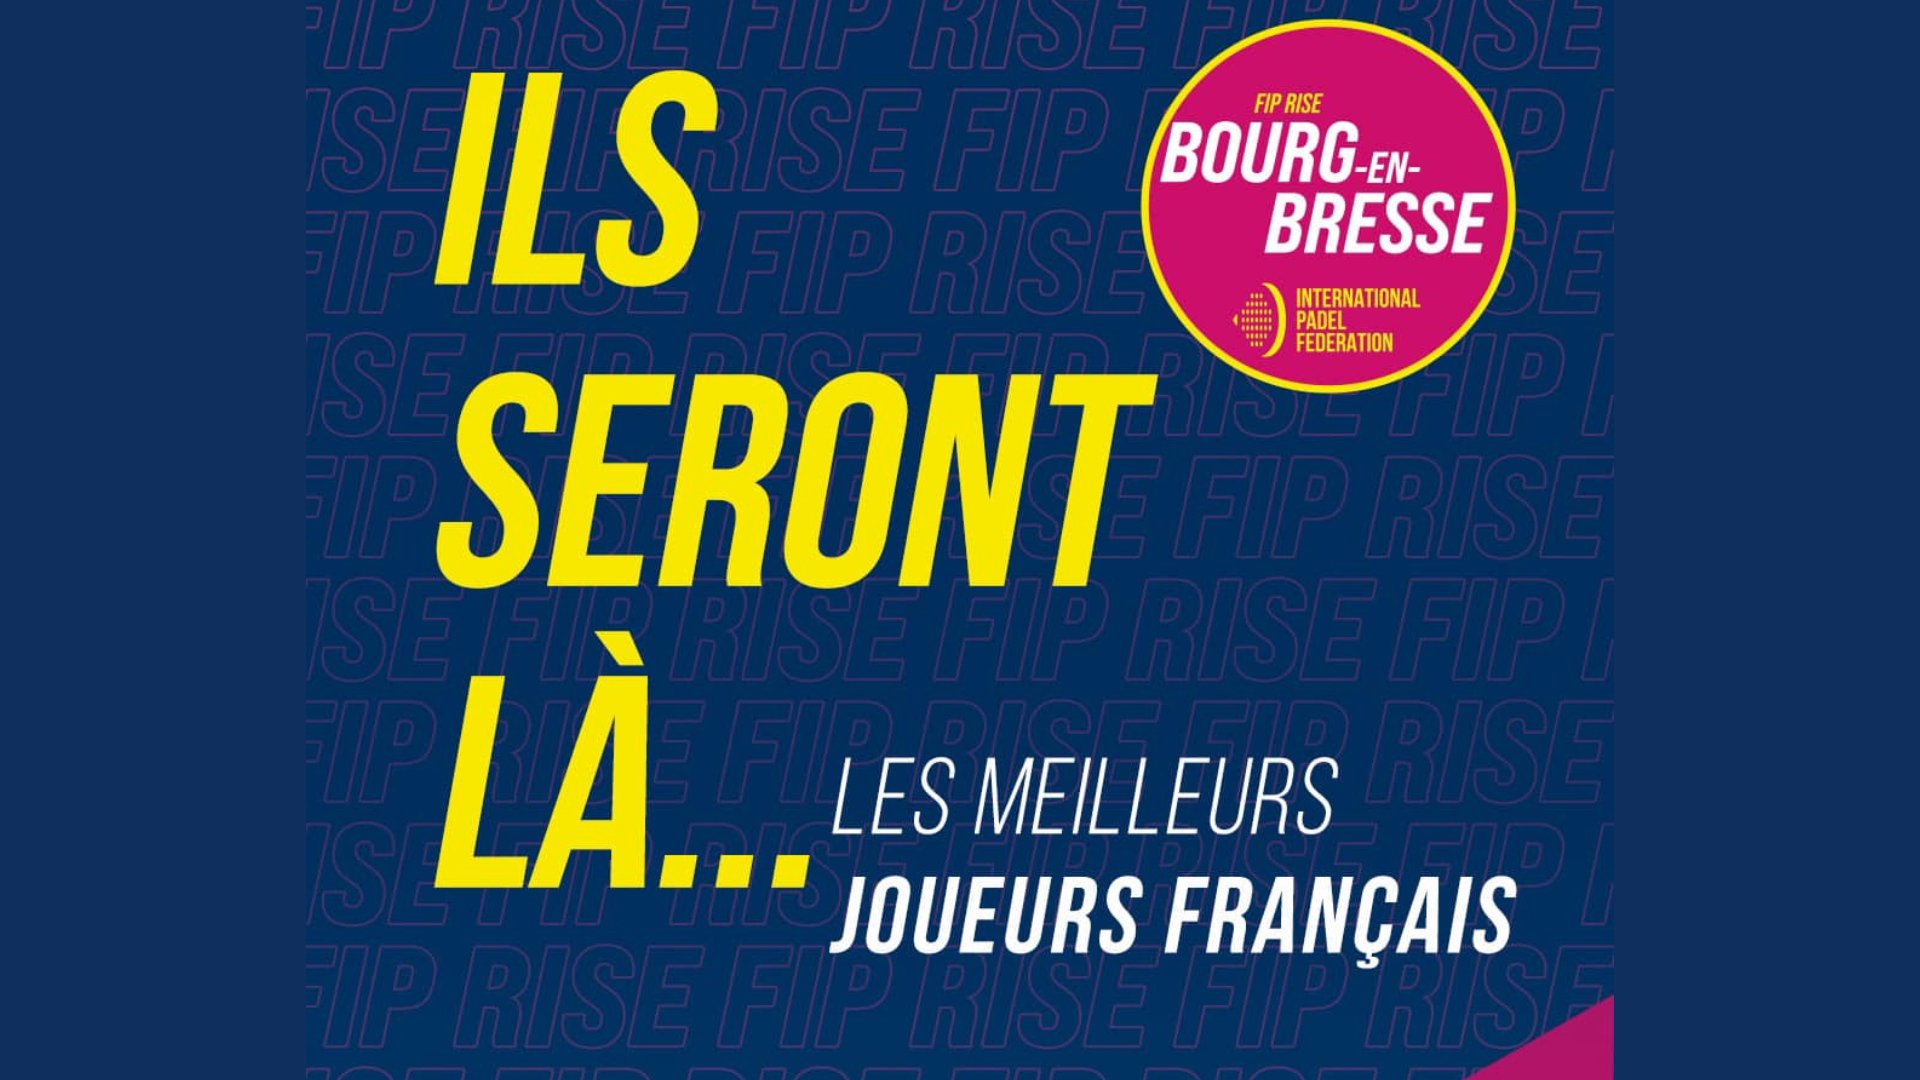 Millors jugadors francesos FIP Rise Bourge en Bresse